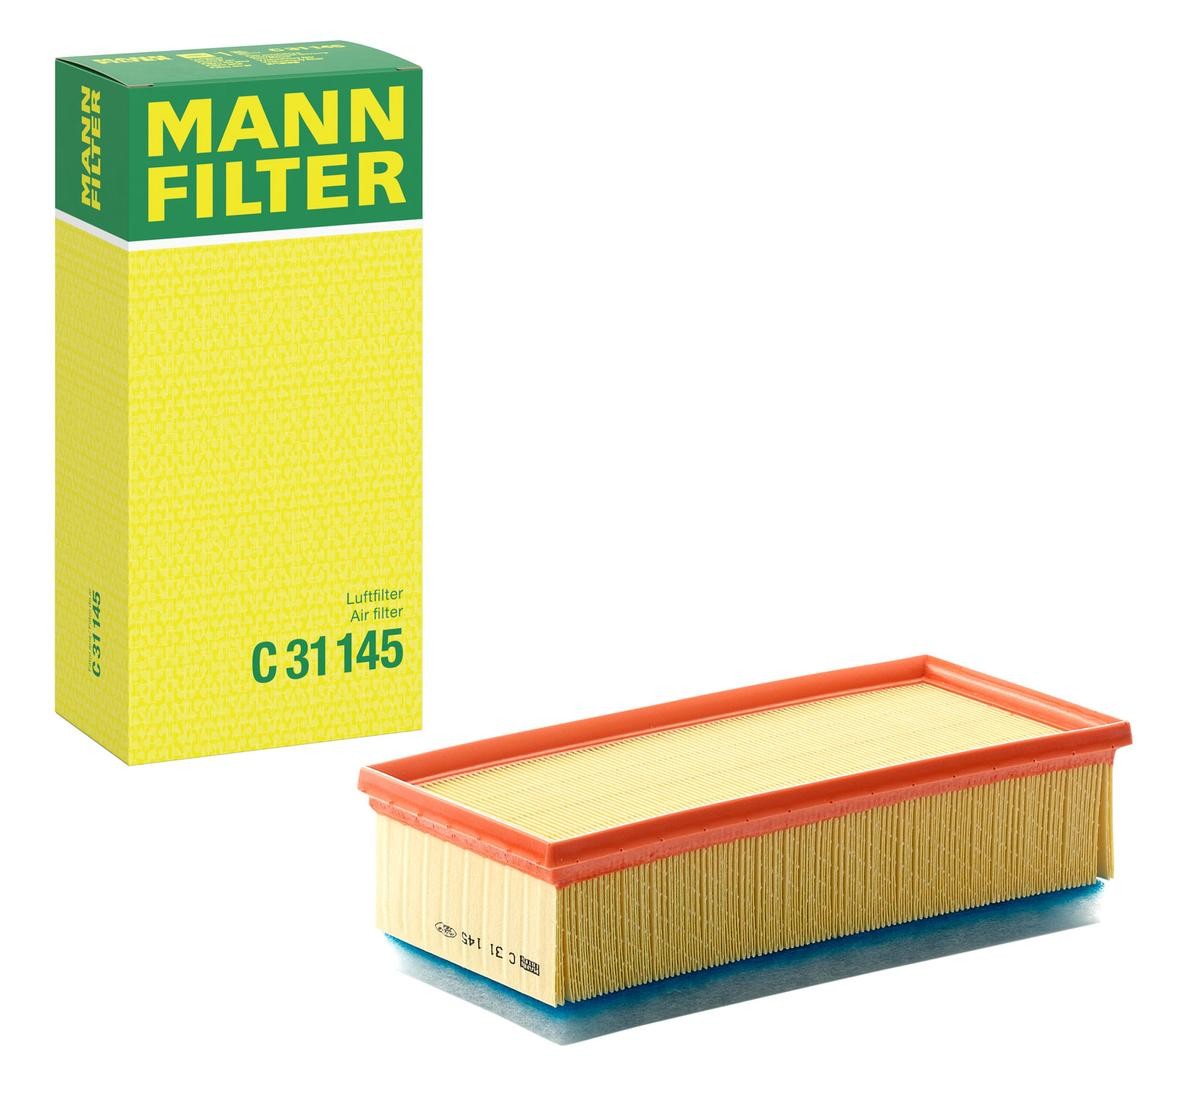 MANN-FILTER Air filter C 31 145 for TOYOTA AVENSIS, COROLLA